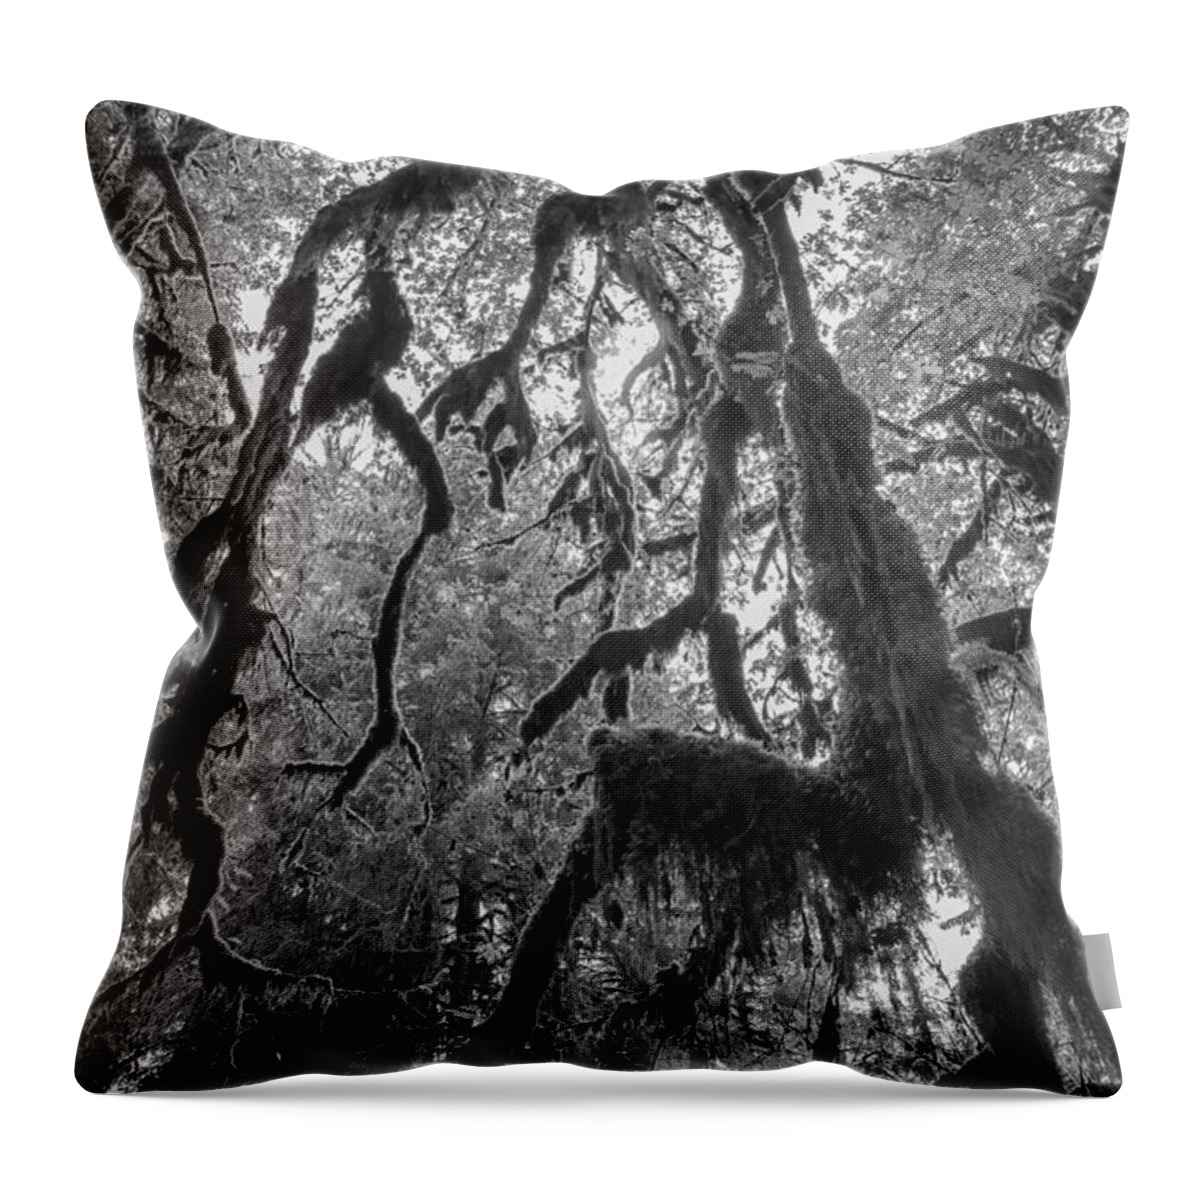 Hoh Rainforest Throw Pillow featuring the photograph Haunted by Kristopher Schoenleber